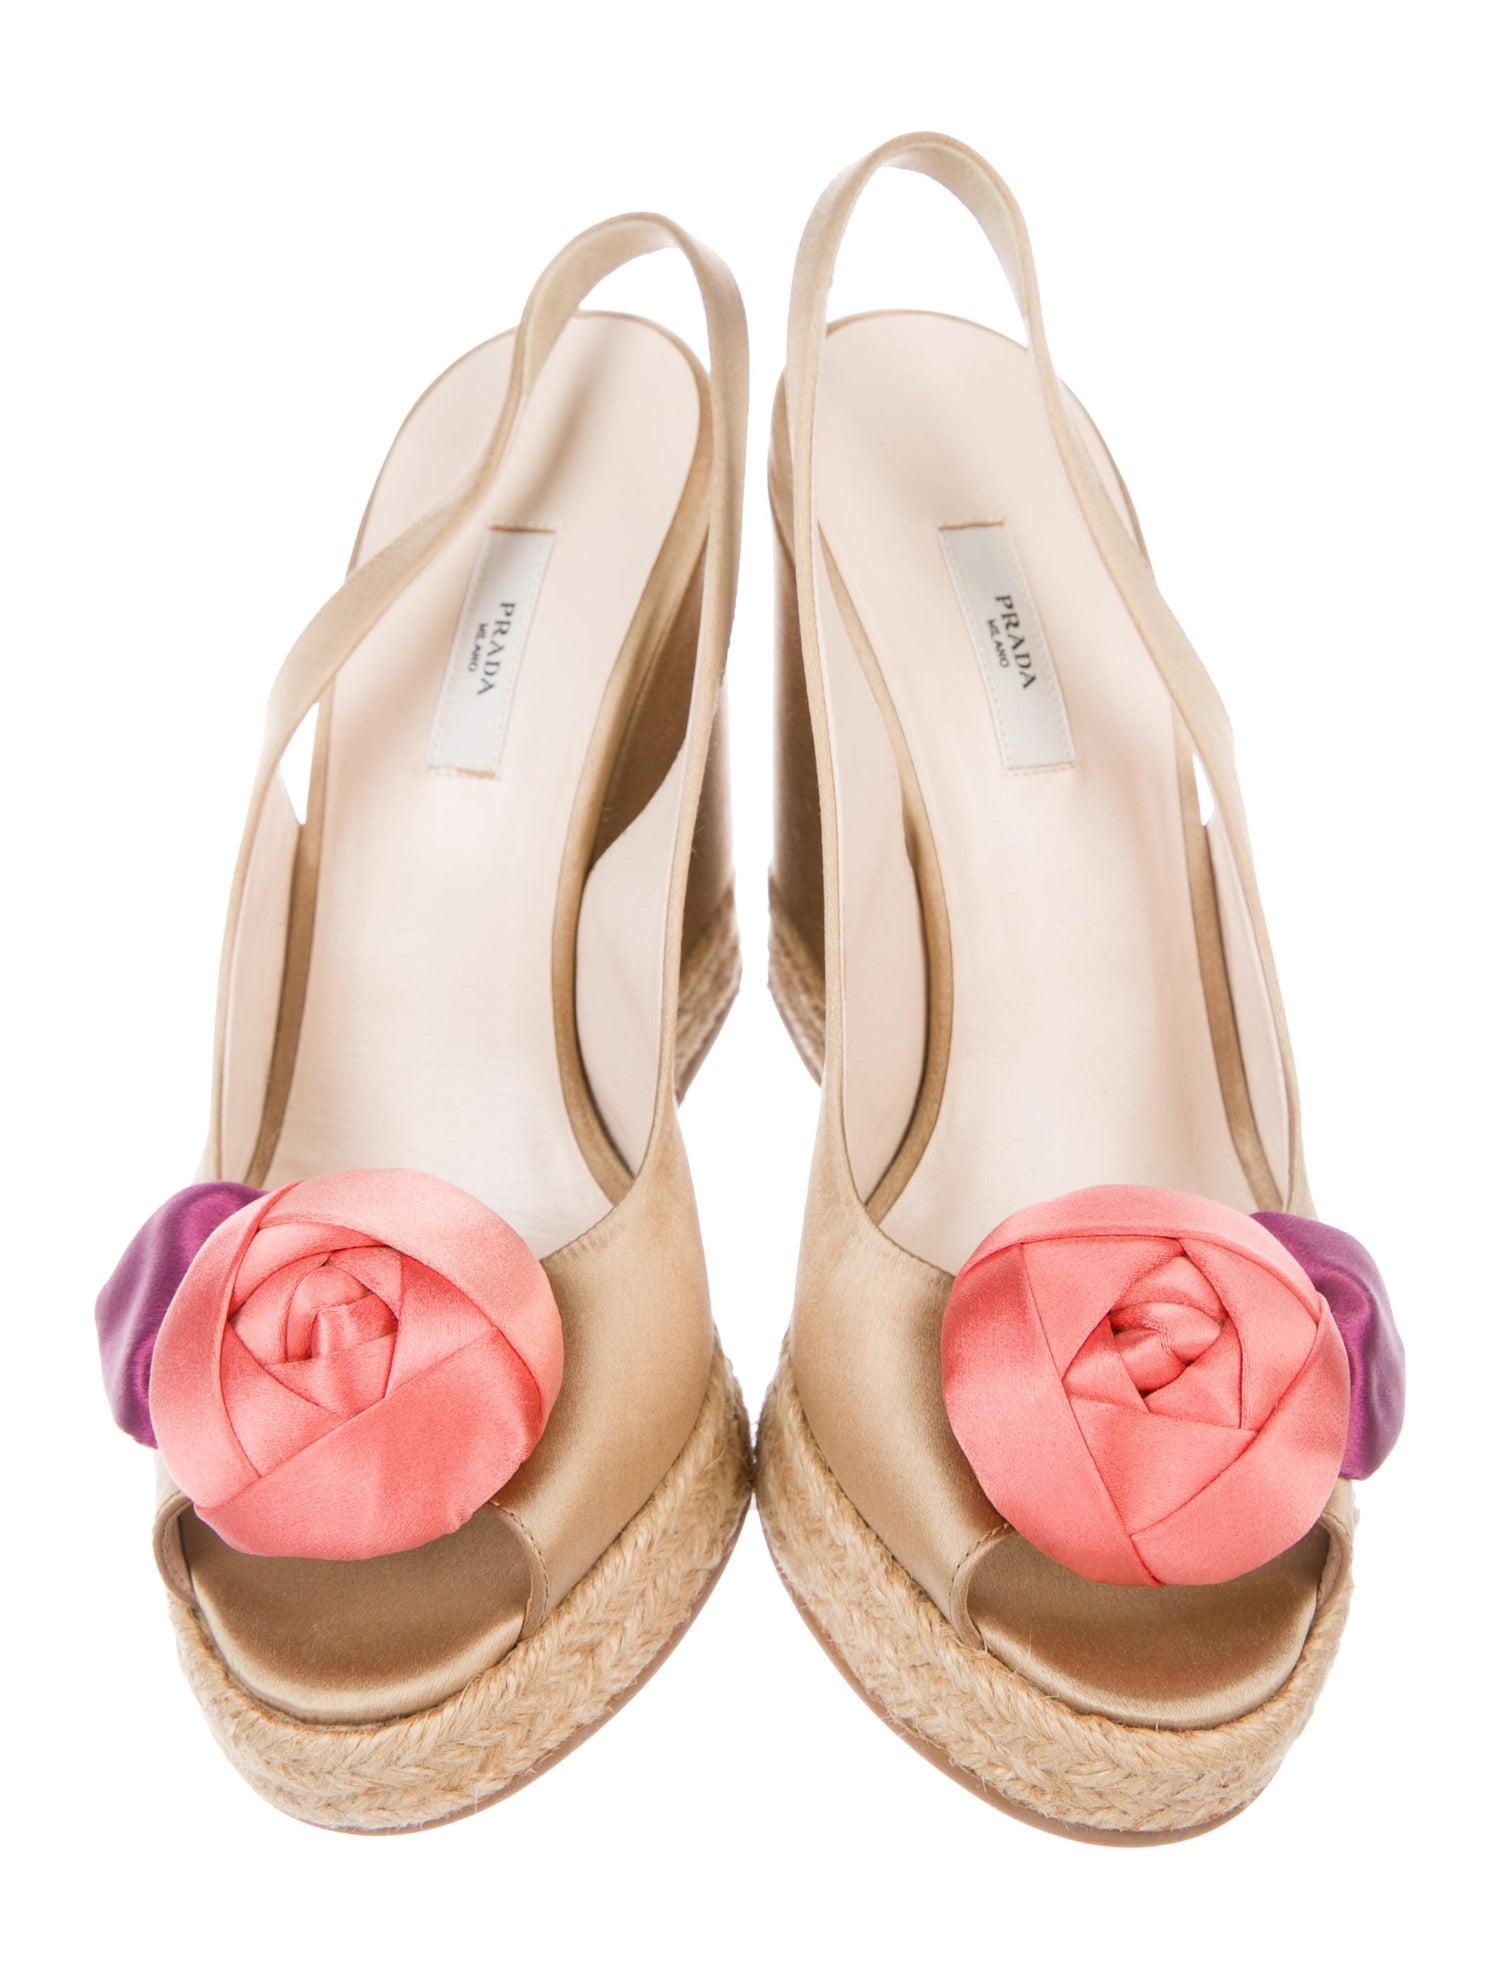 Women's NEW Prada Satin Raso Caramel Wedge Heel Sandals with Floral Flower Trimming